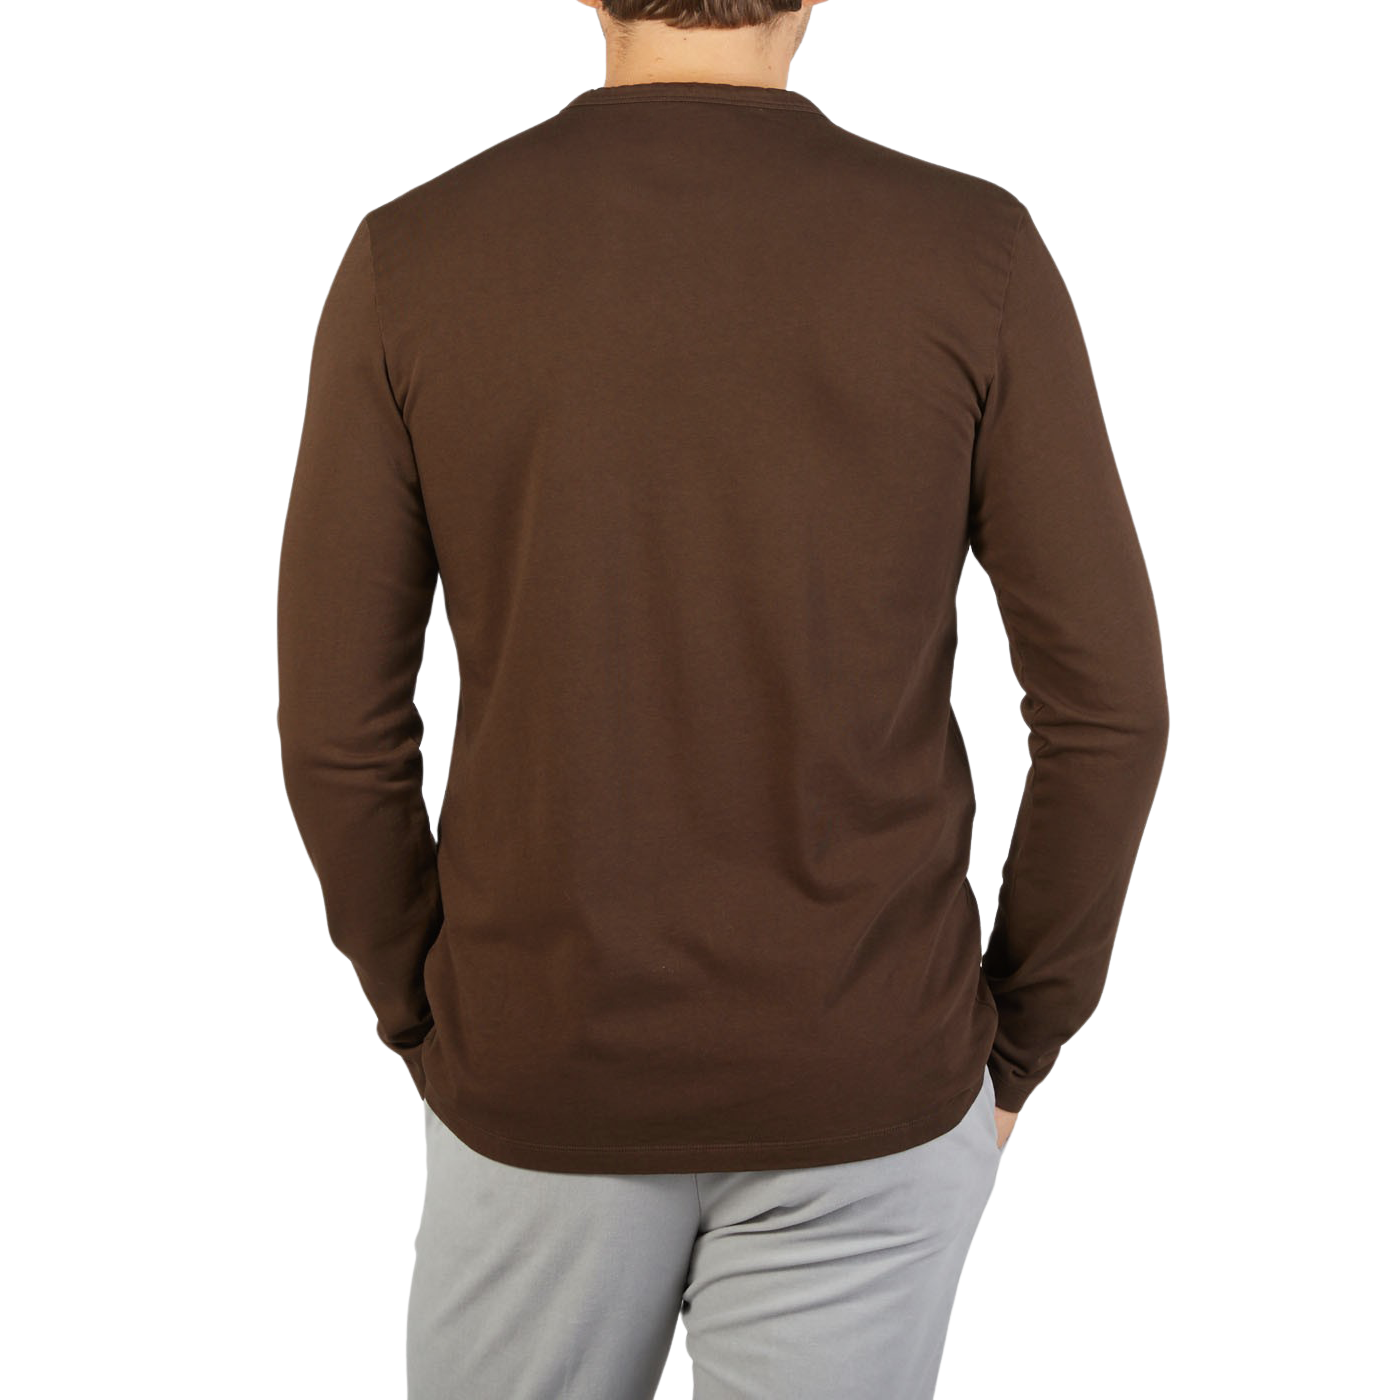 The back view of a man wearing a Tela Genova Dark Brown Organic Cotton LS T-Shirt, showcasing heritage clothing.